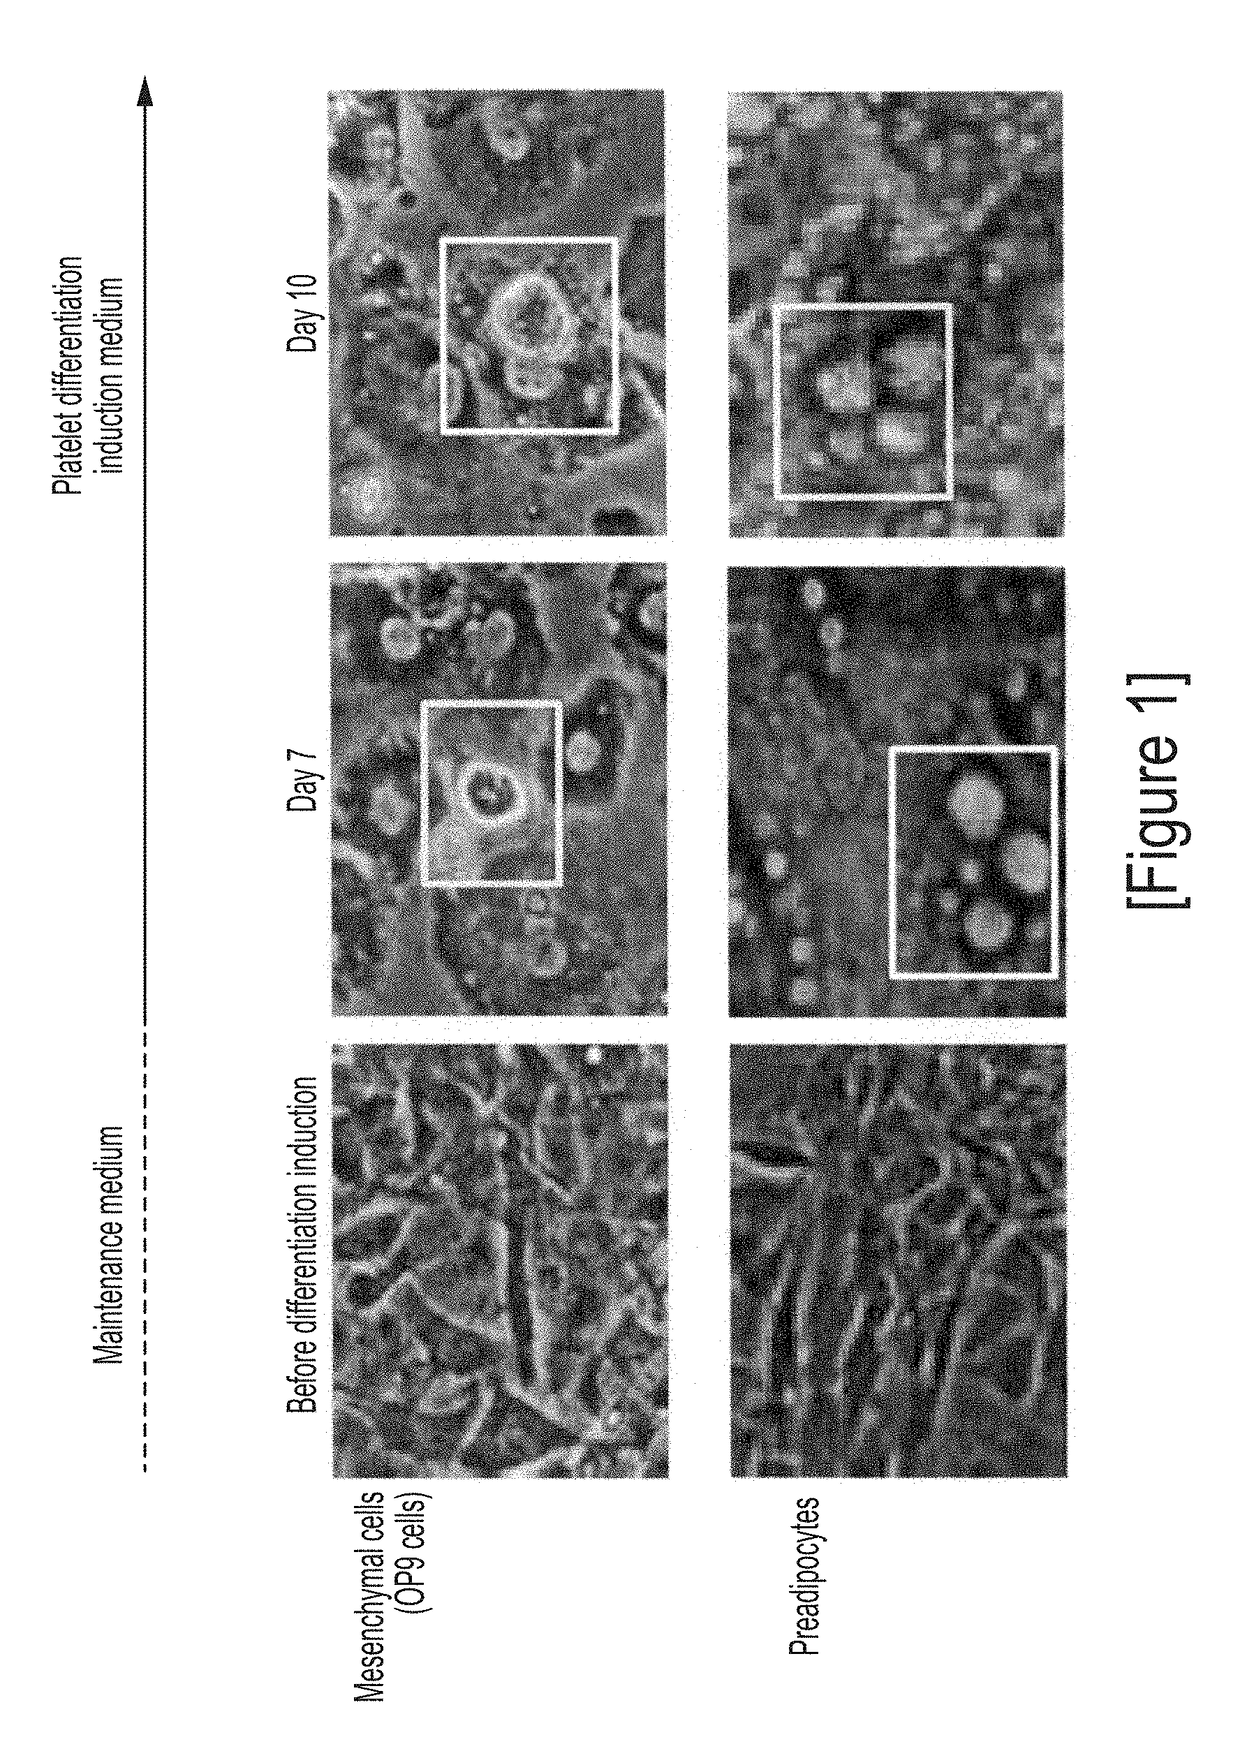 Method for producing megakaryocytes, platelets and/or thrombopoietin using mesenchymal cells